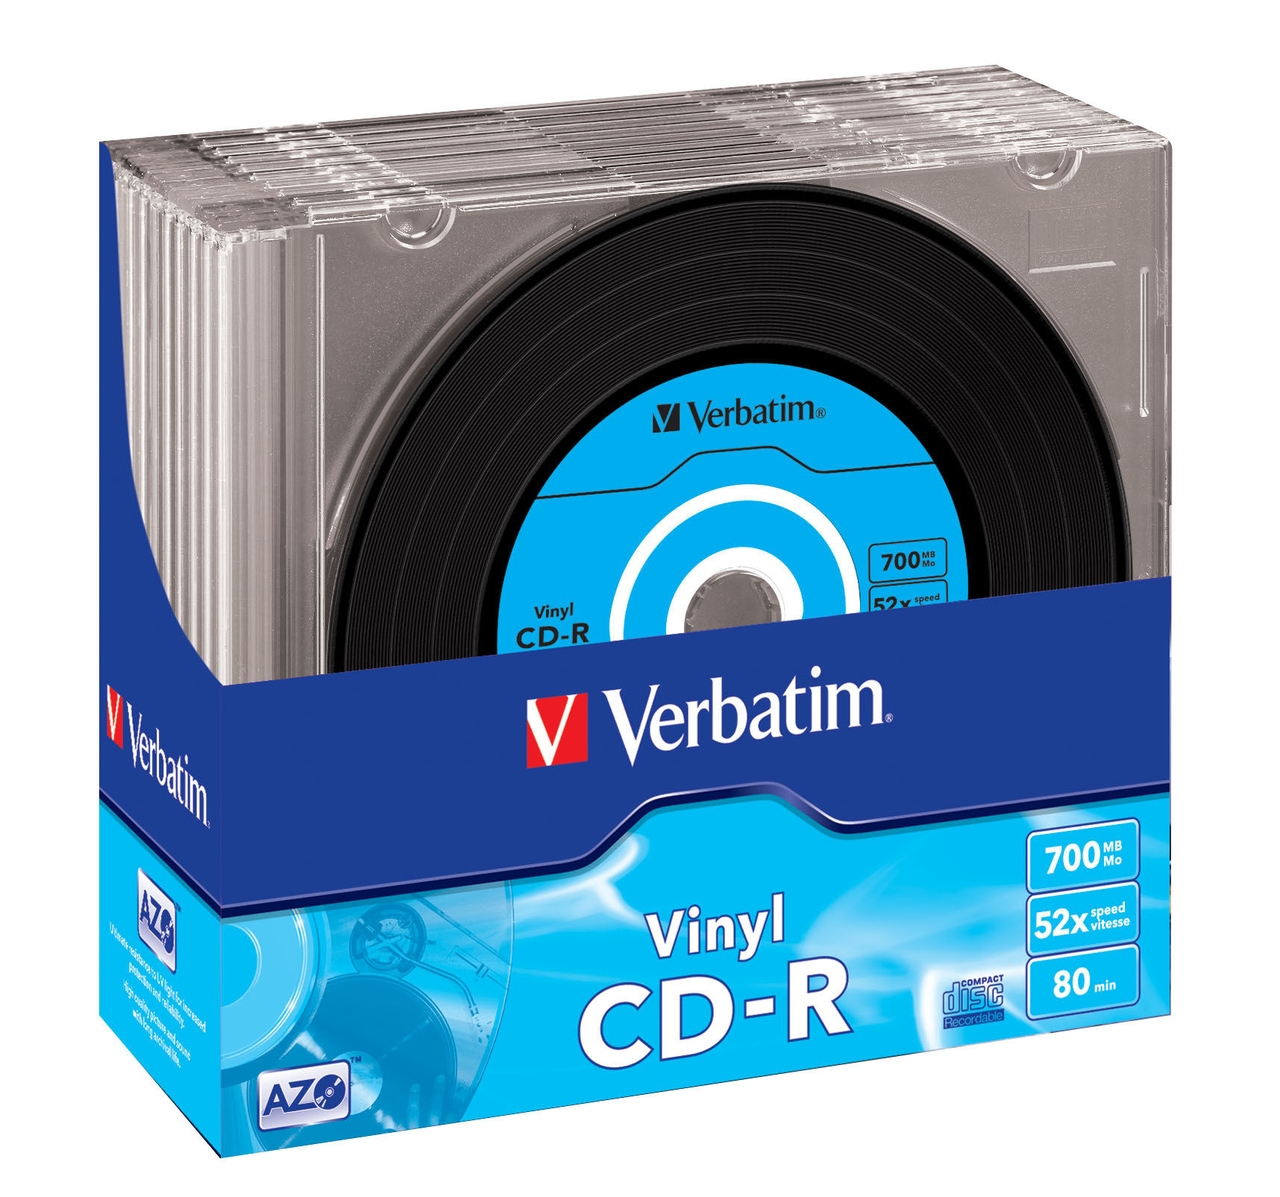  Verbatim CD-R 700Mb 52x Vinyl slim box 80min